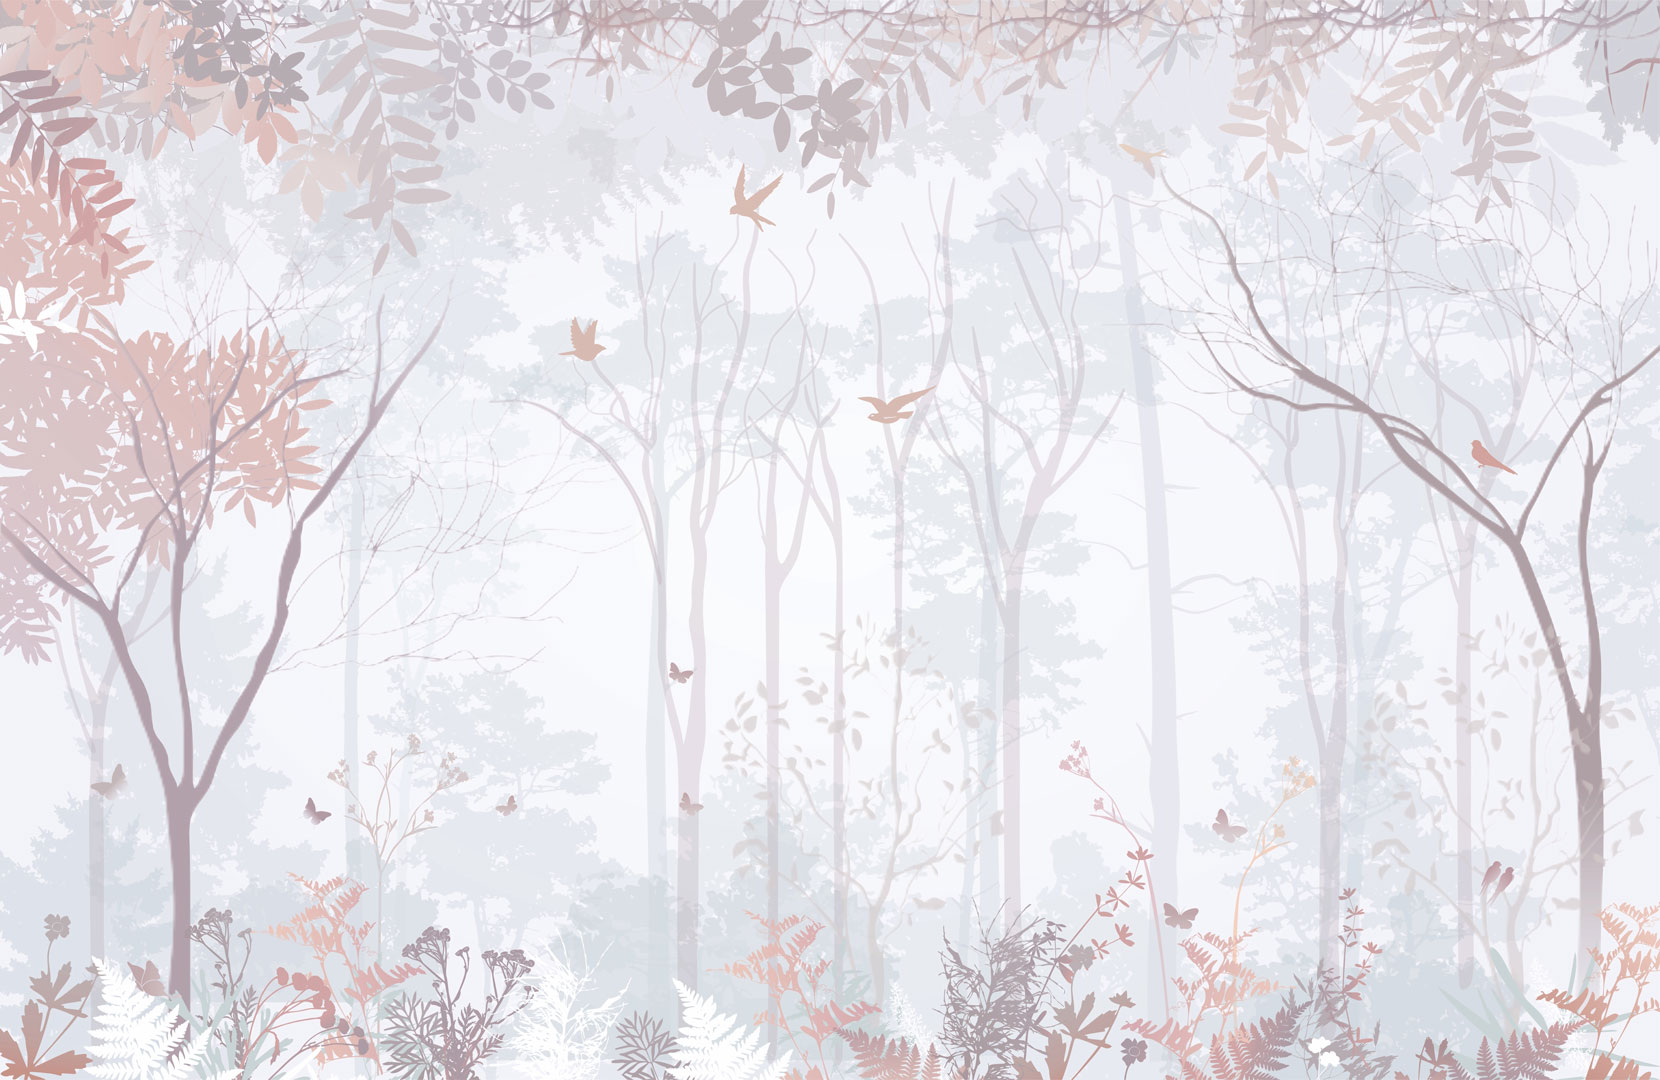 Pastel wallpaper in beige tones, enchanted forest with ferns, birds and butterflies - Dekoori image 1